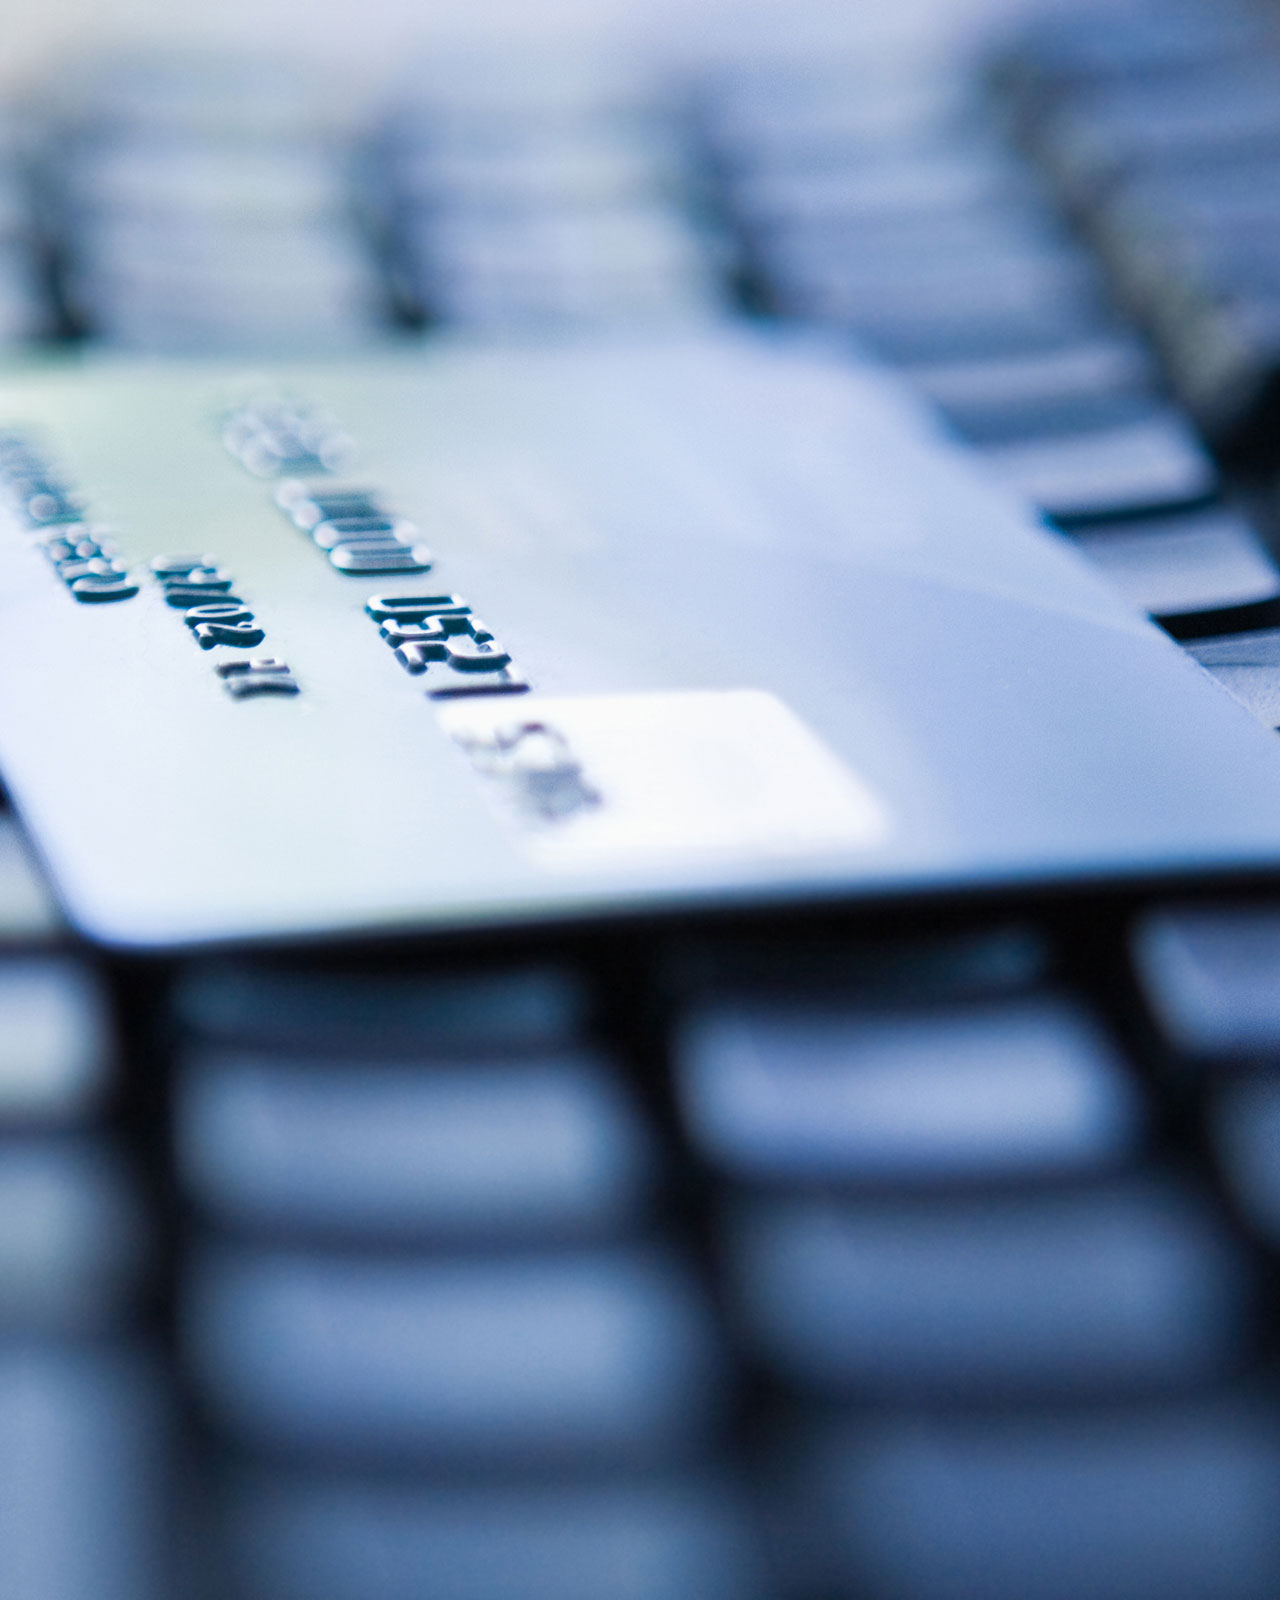 e-commerce credit card on keyboard